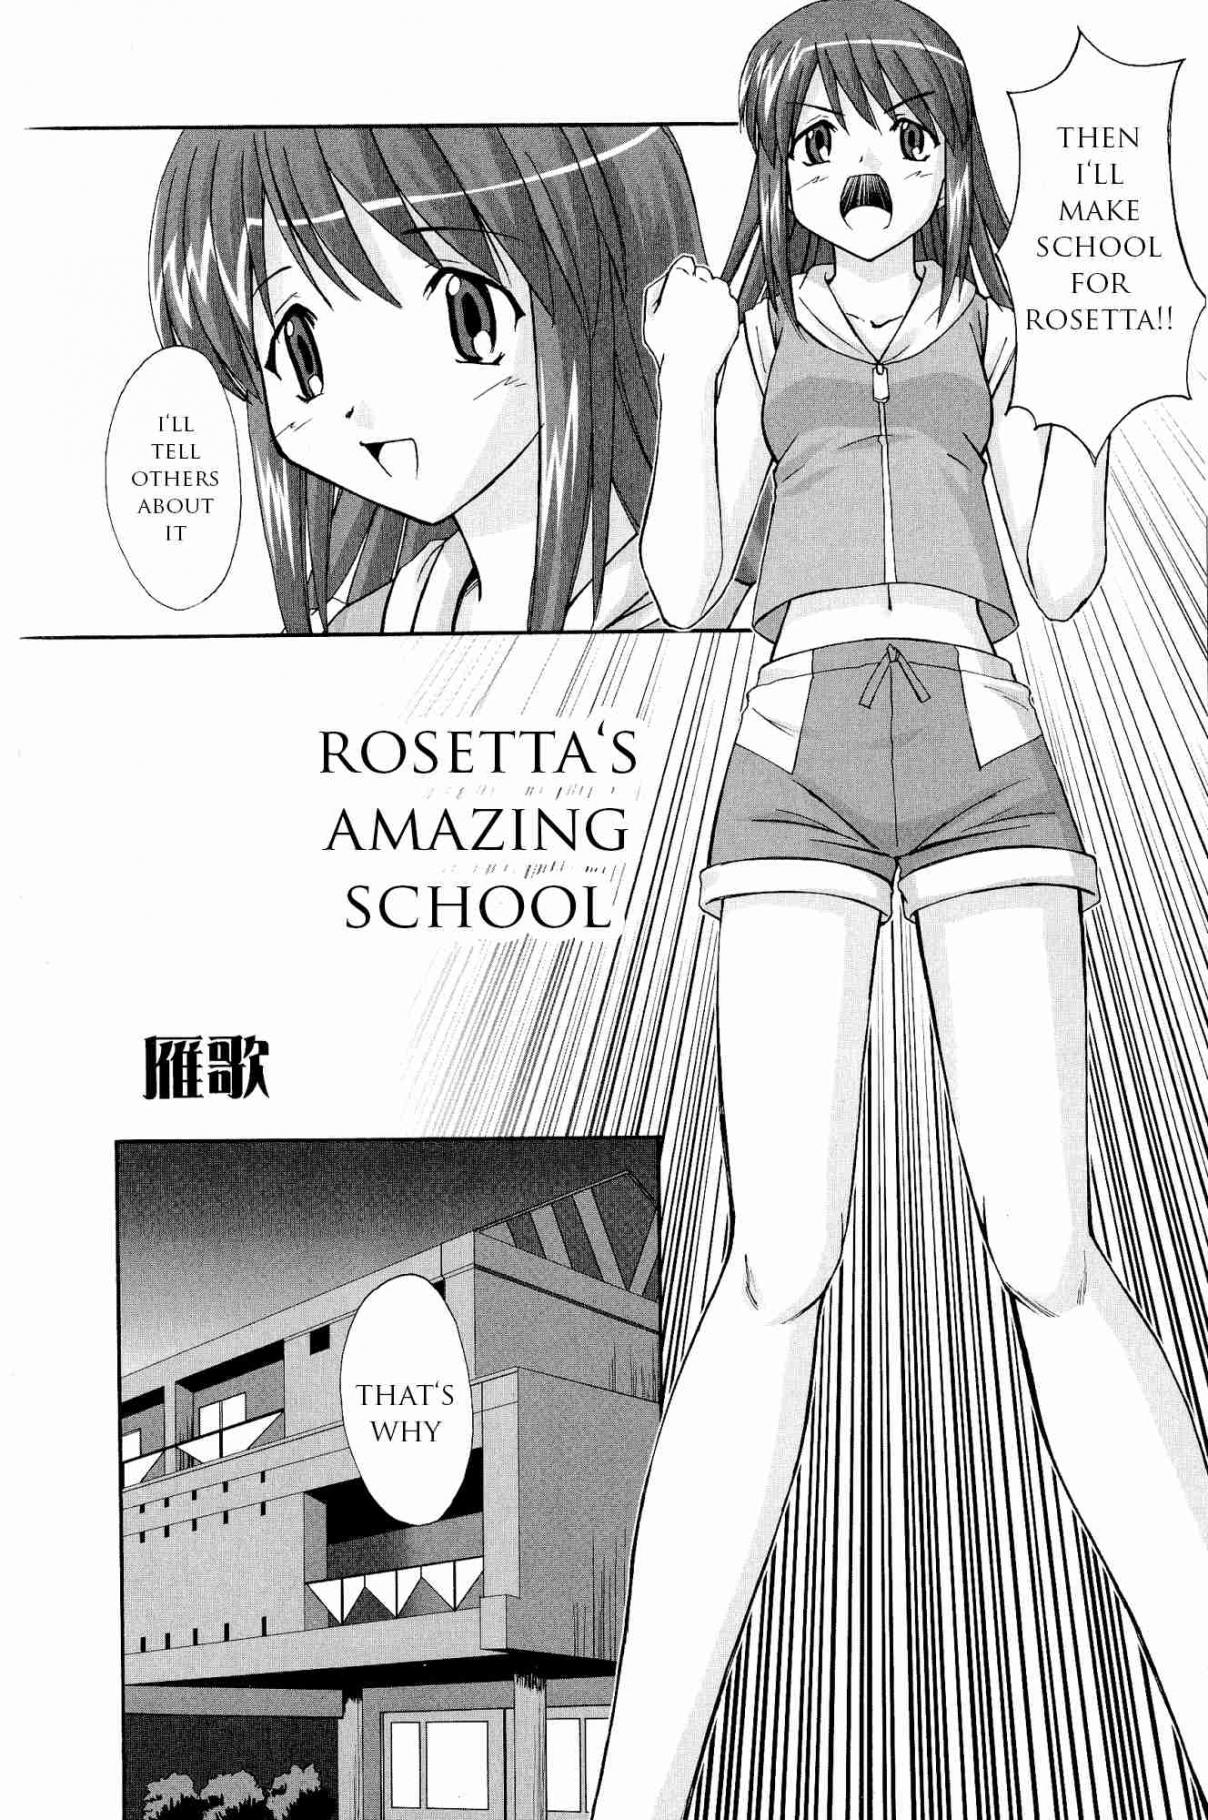 Kaleido star comic anthology Vol. 1 Ch. 9 Rosetta's amazing school